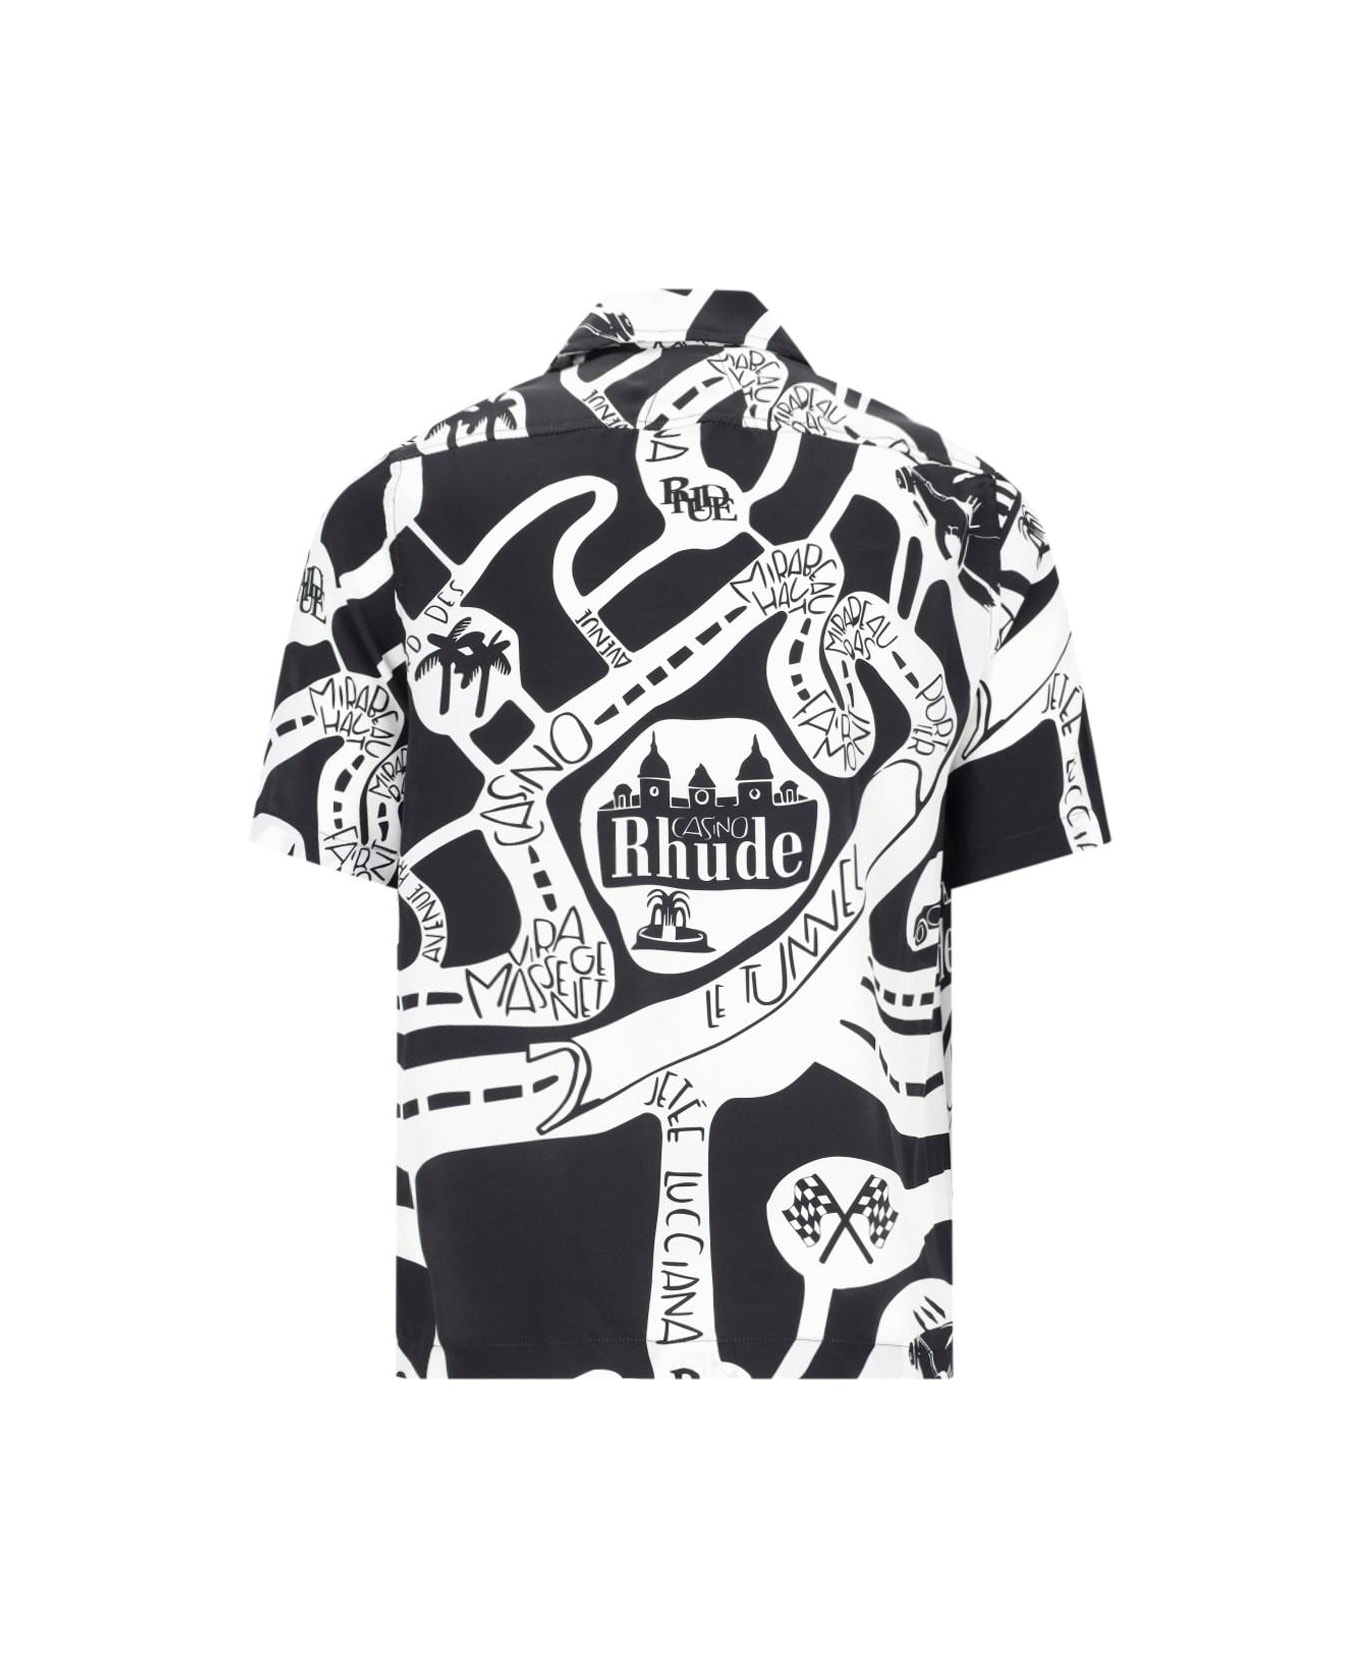 Rhude Printed Shirt - Black/white